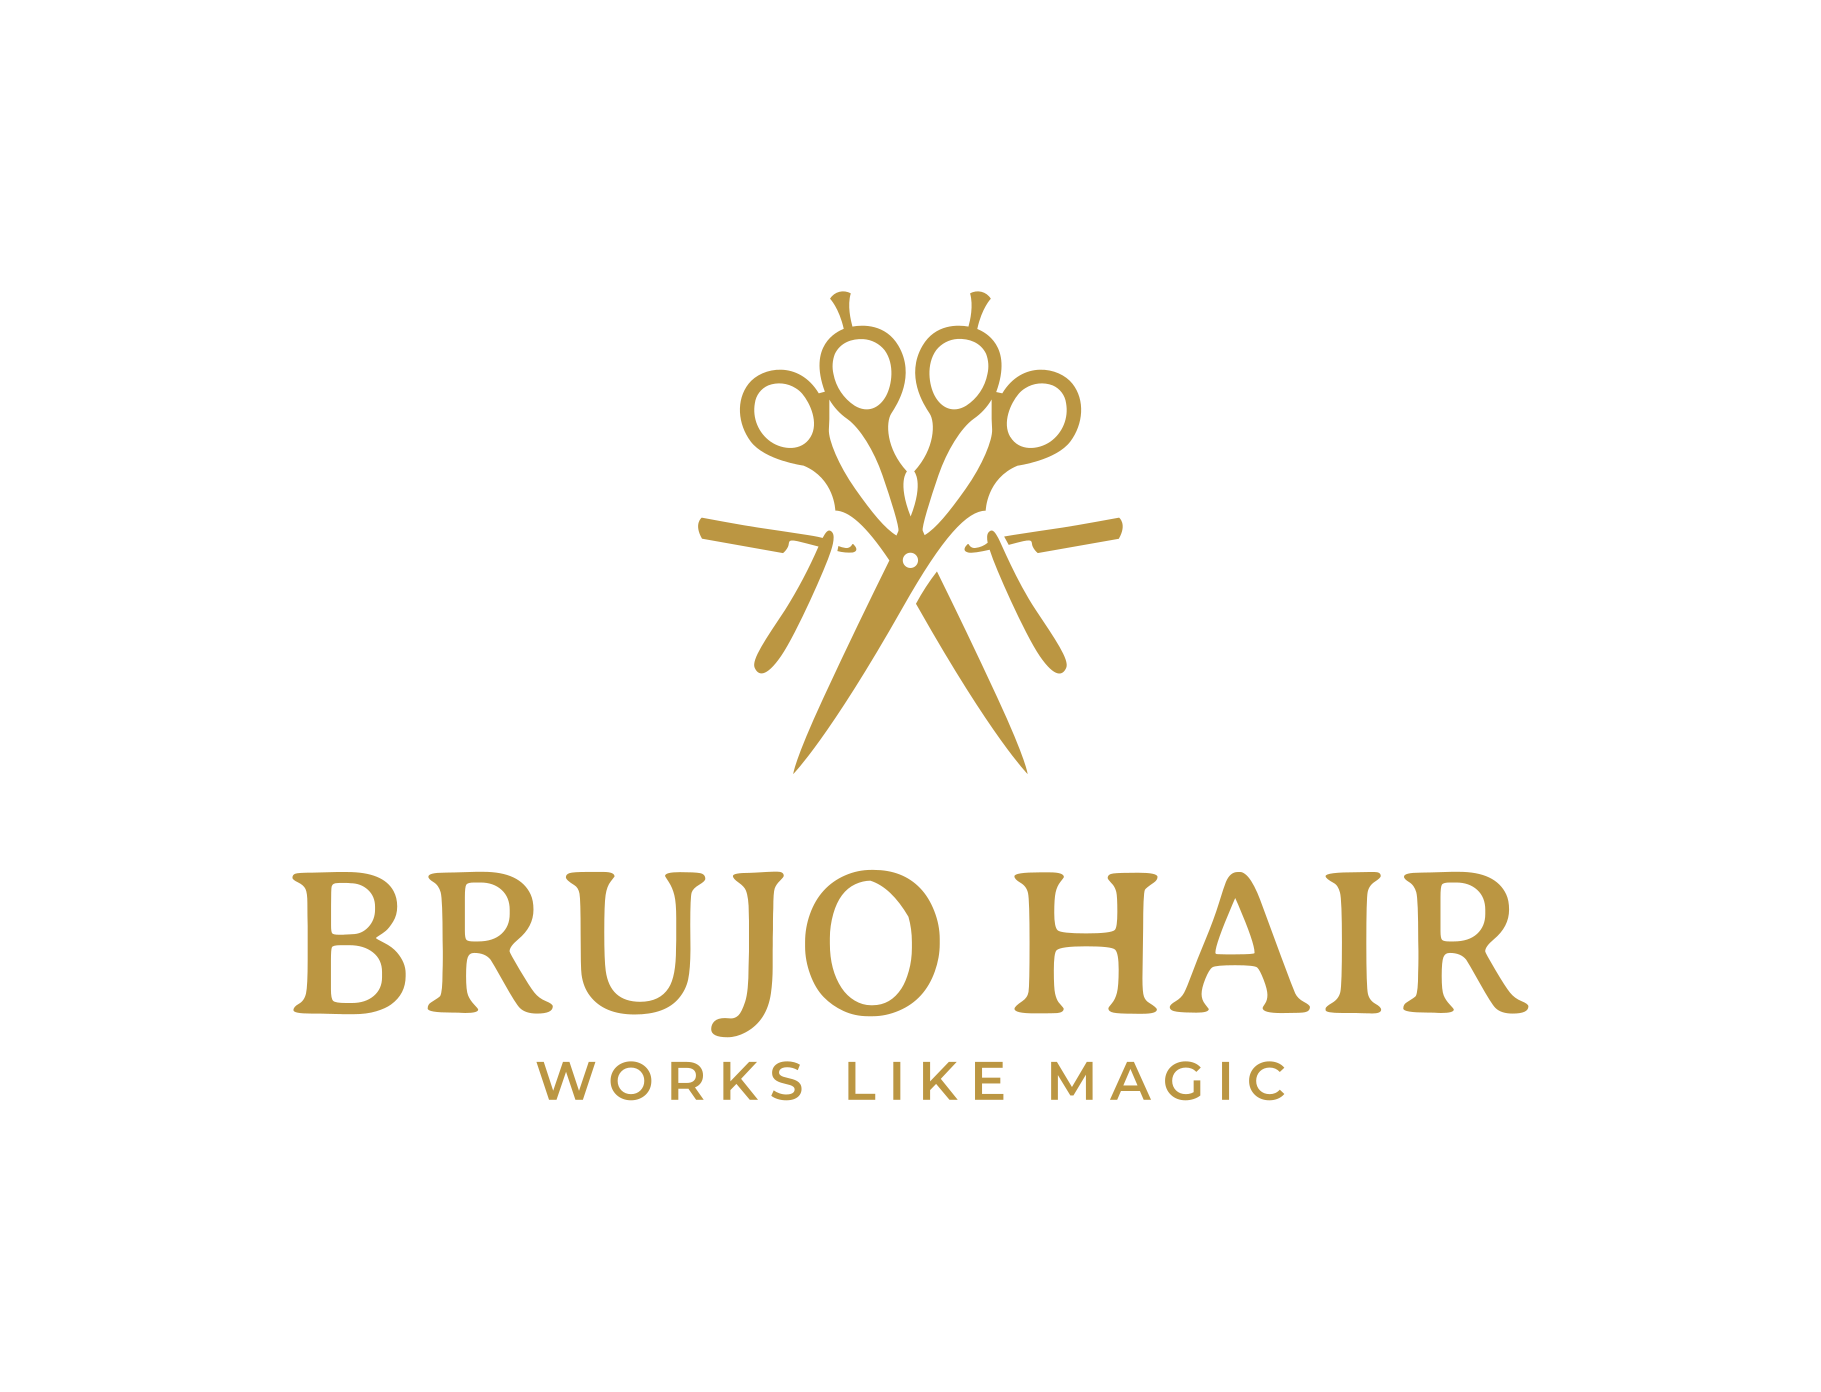 BrujoHair – Brujo Hair